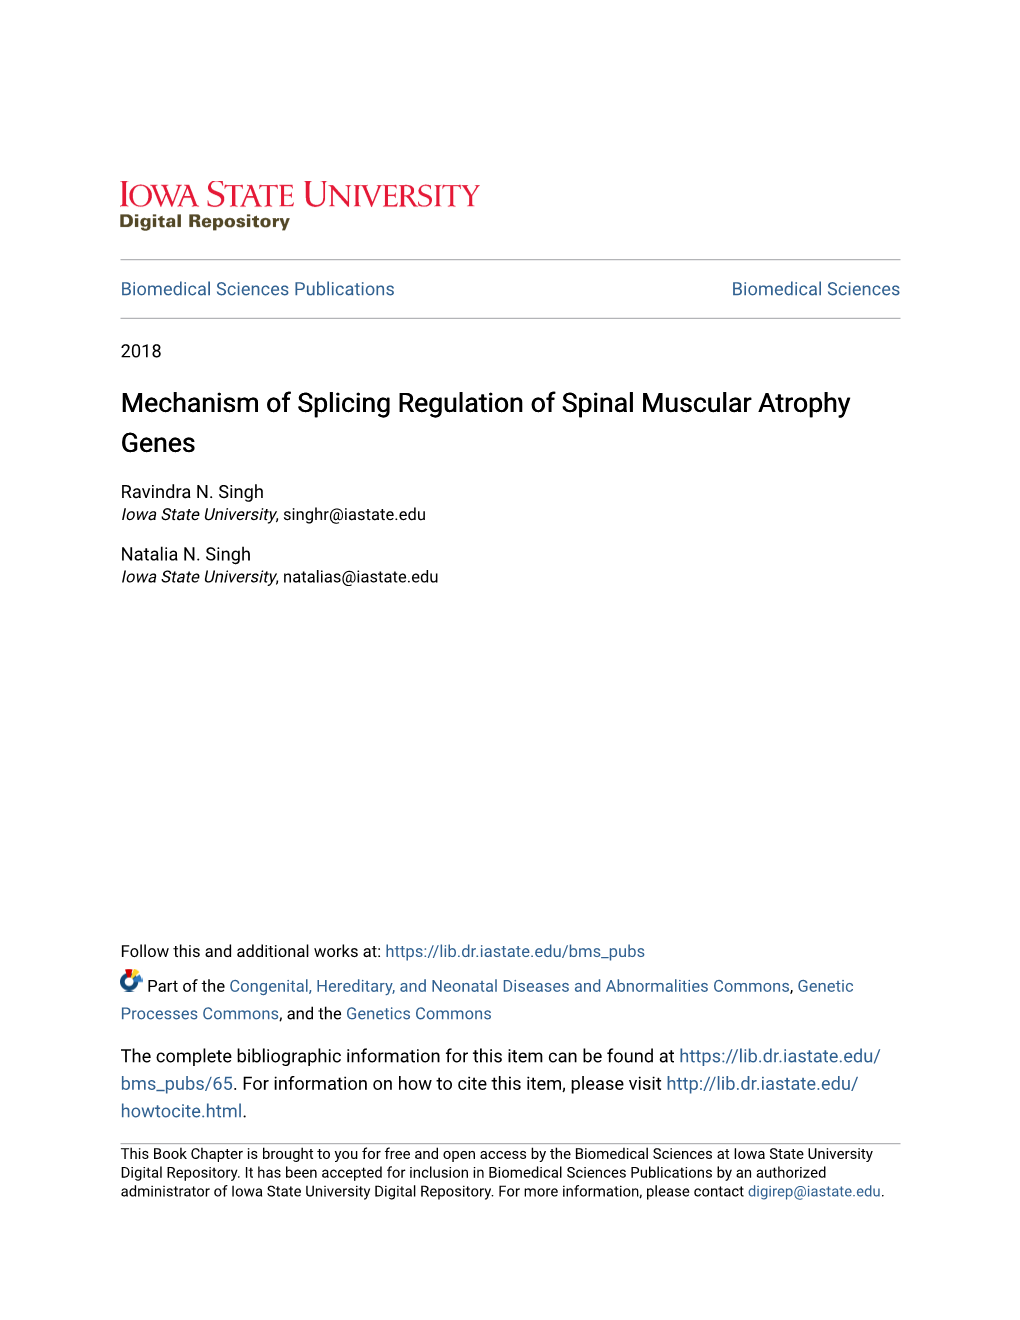 Mechanism of Splicing Regulation of Spinal Muscular Atrophy Genes